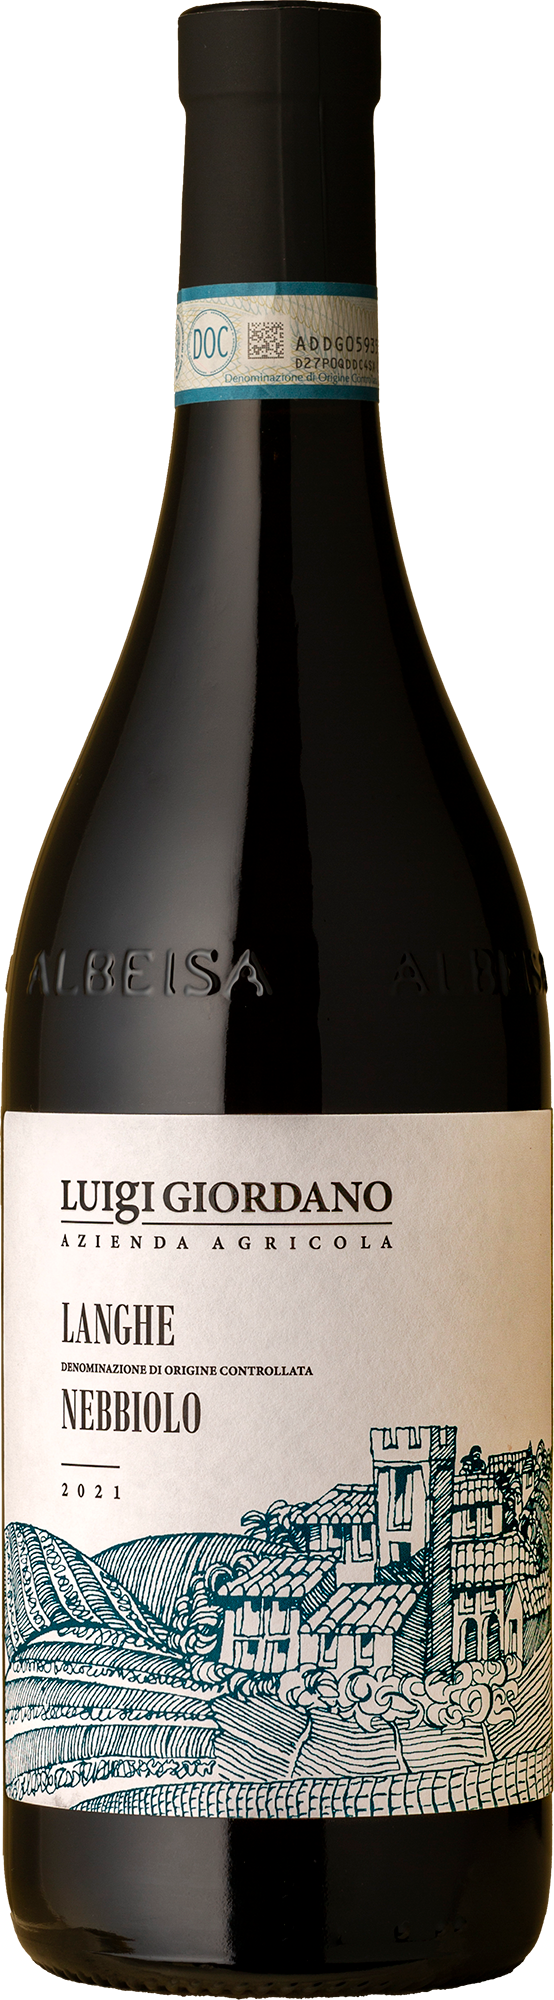 Luigi Giordano - Langhe Nebbiolo 2021 Red Wine